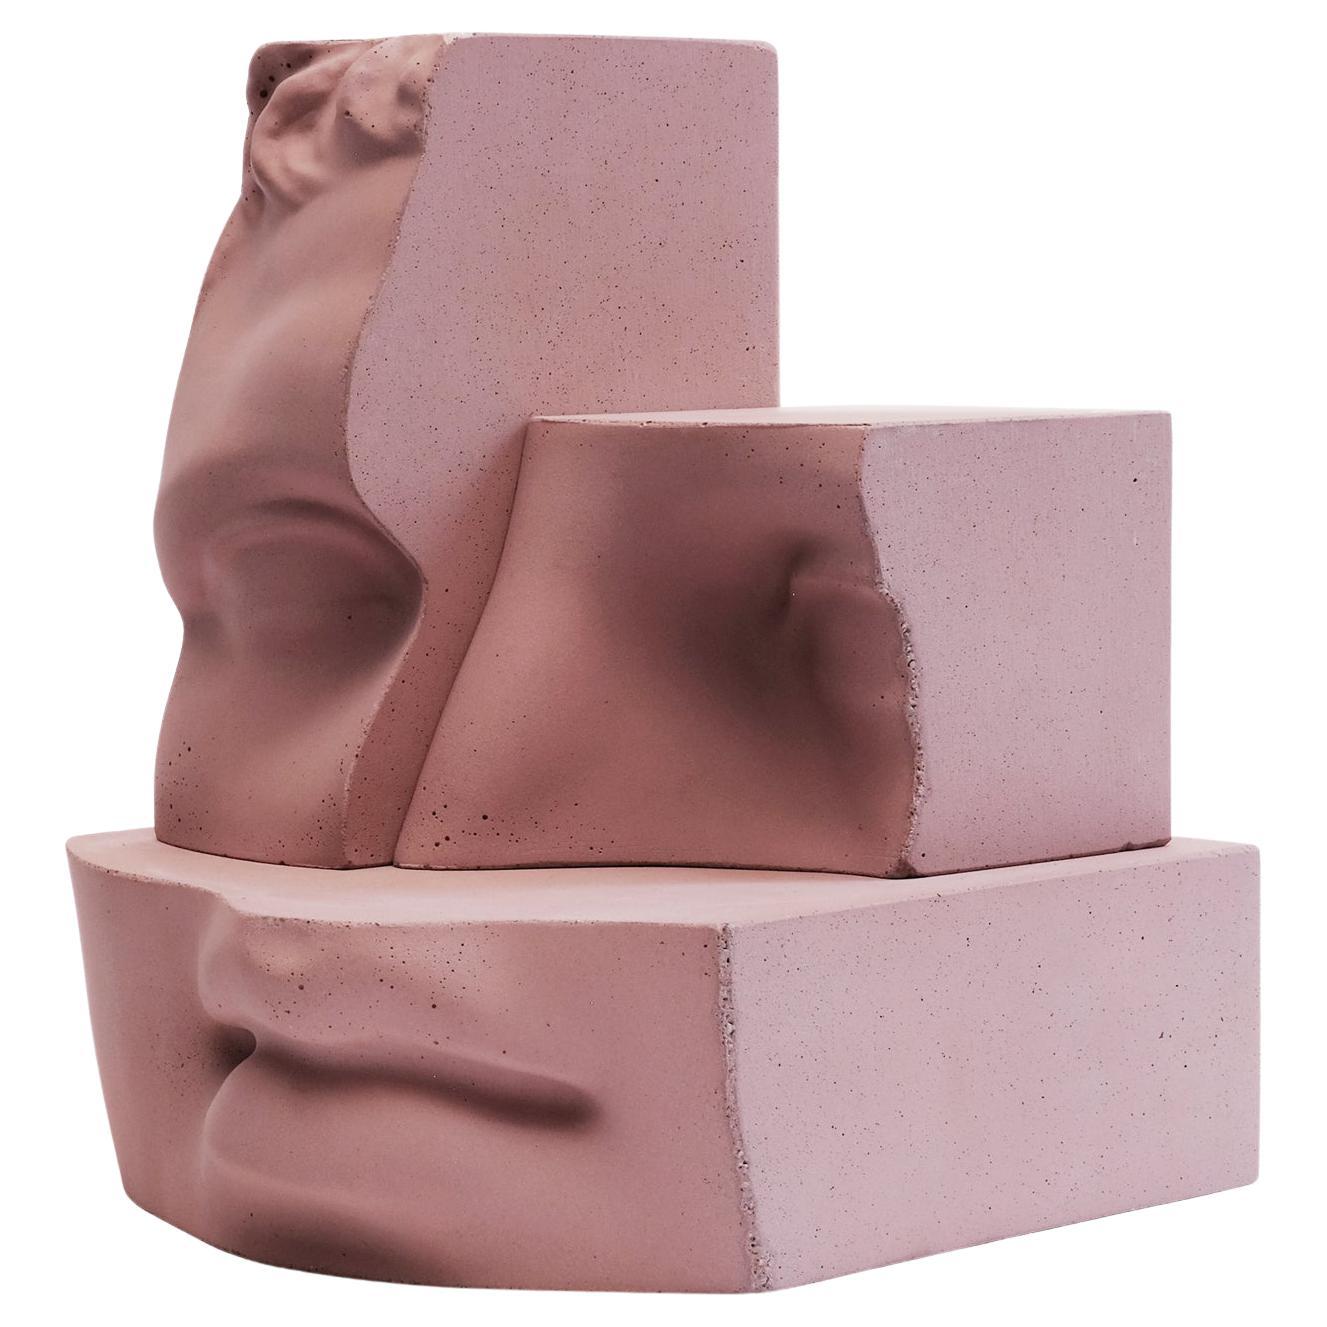 Hermes - Rose - Design Sculpture Paolo Giordano Concrete Cement Cast For Sale